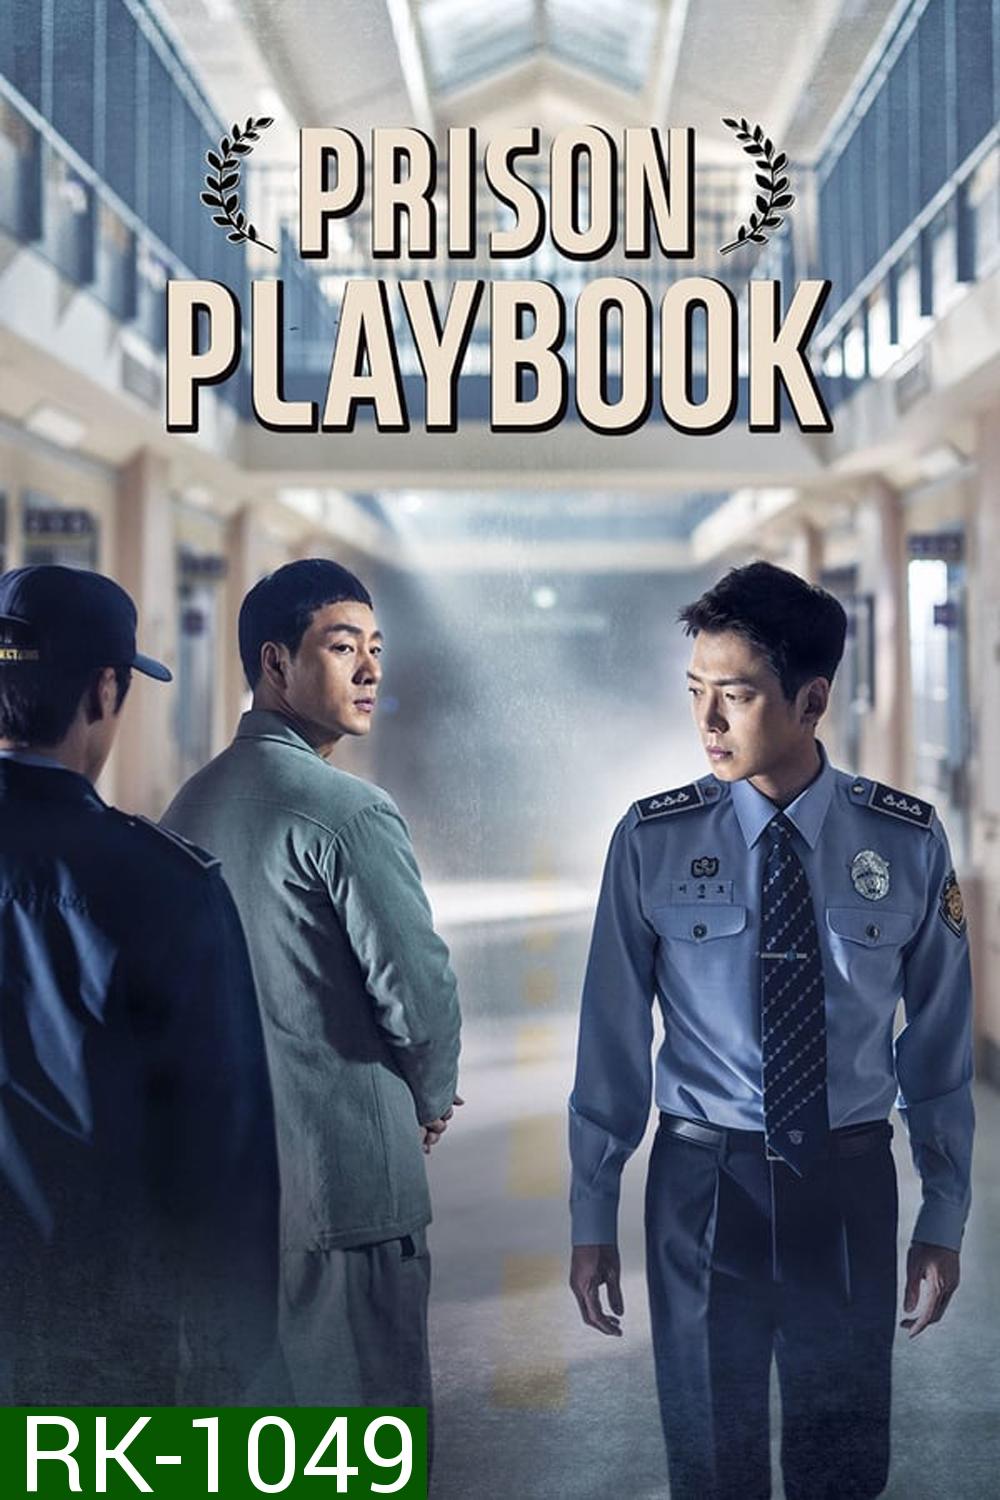 Prison Playbook ฟ้าพลิก ชีวิตยังต้องสู้ (2017)